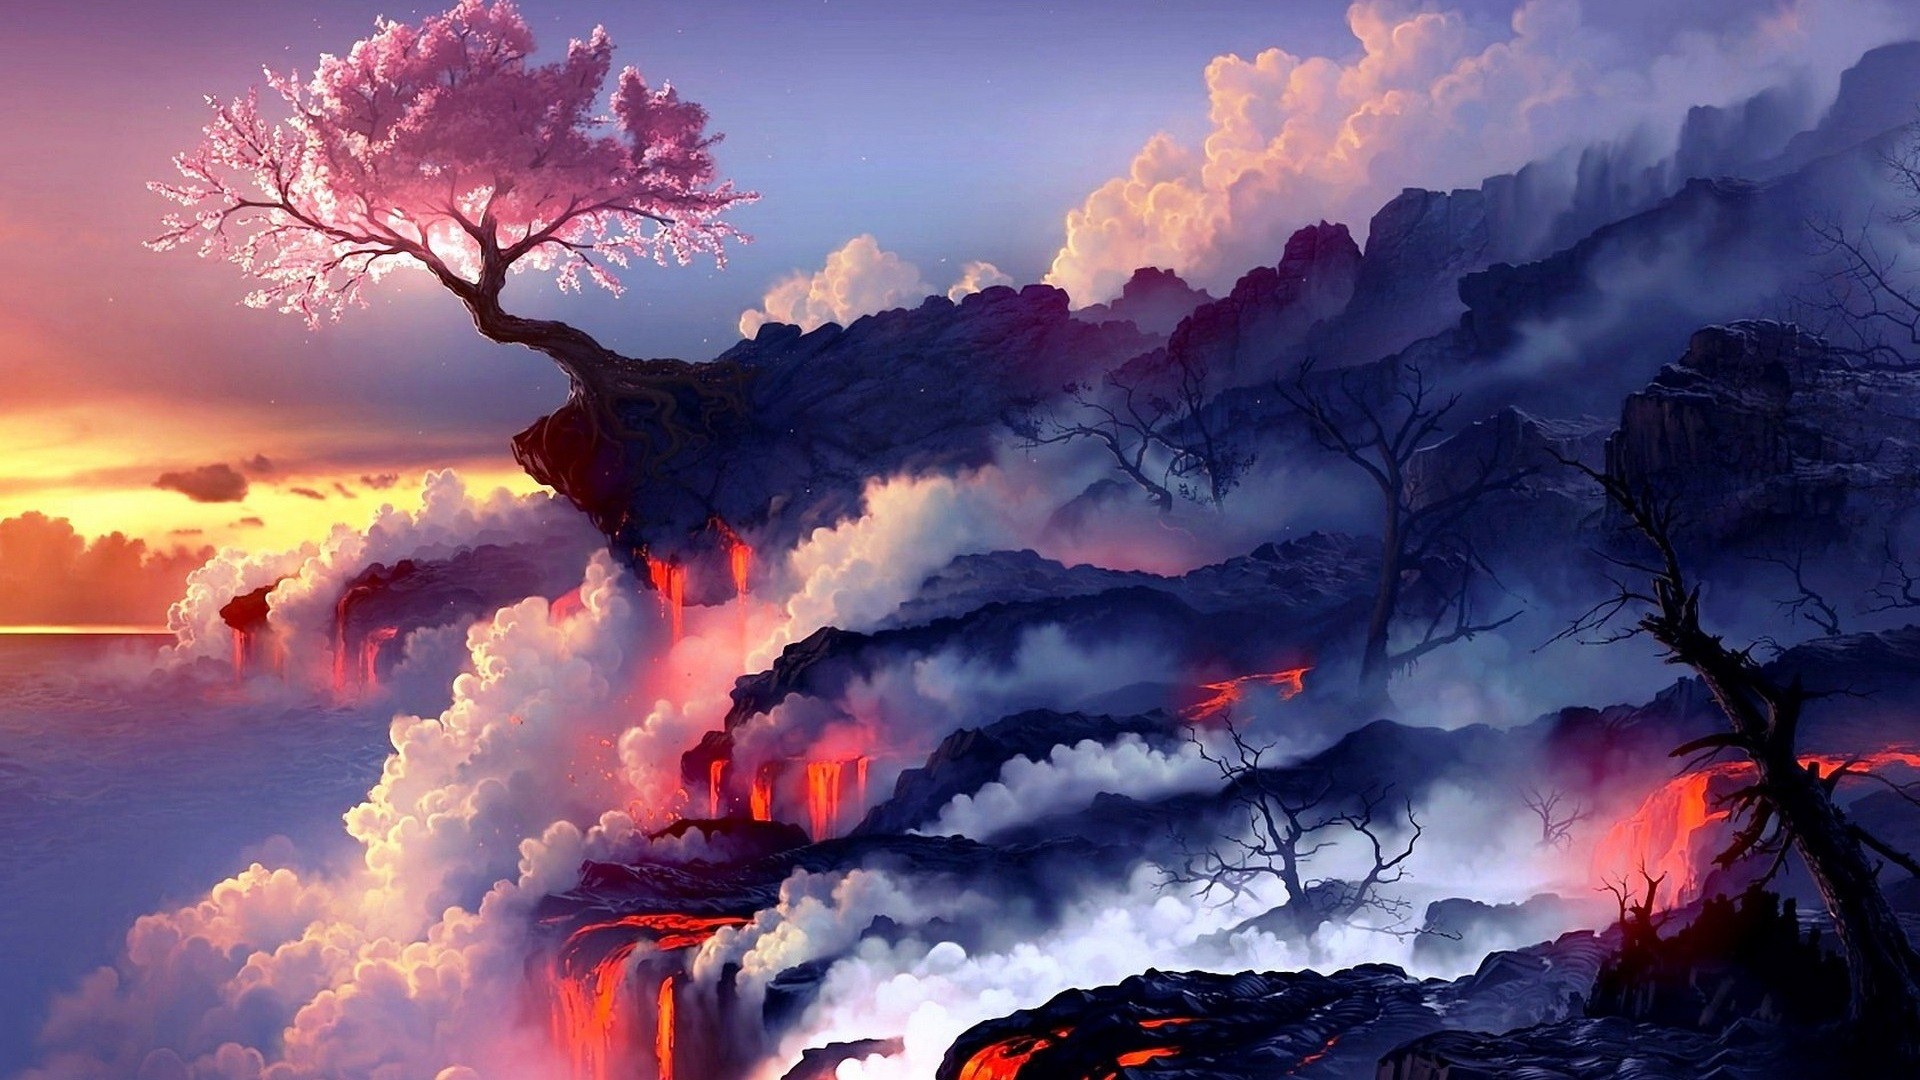 Artwork Nature Landscape Fantasy Art Fire Trees Lava Cherry Blossom Clouds Smoke Digital Art Album C 1920x1080